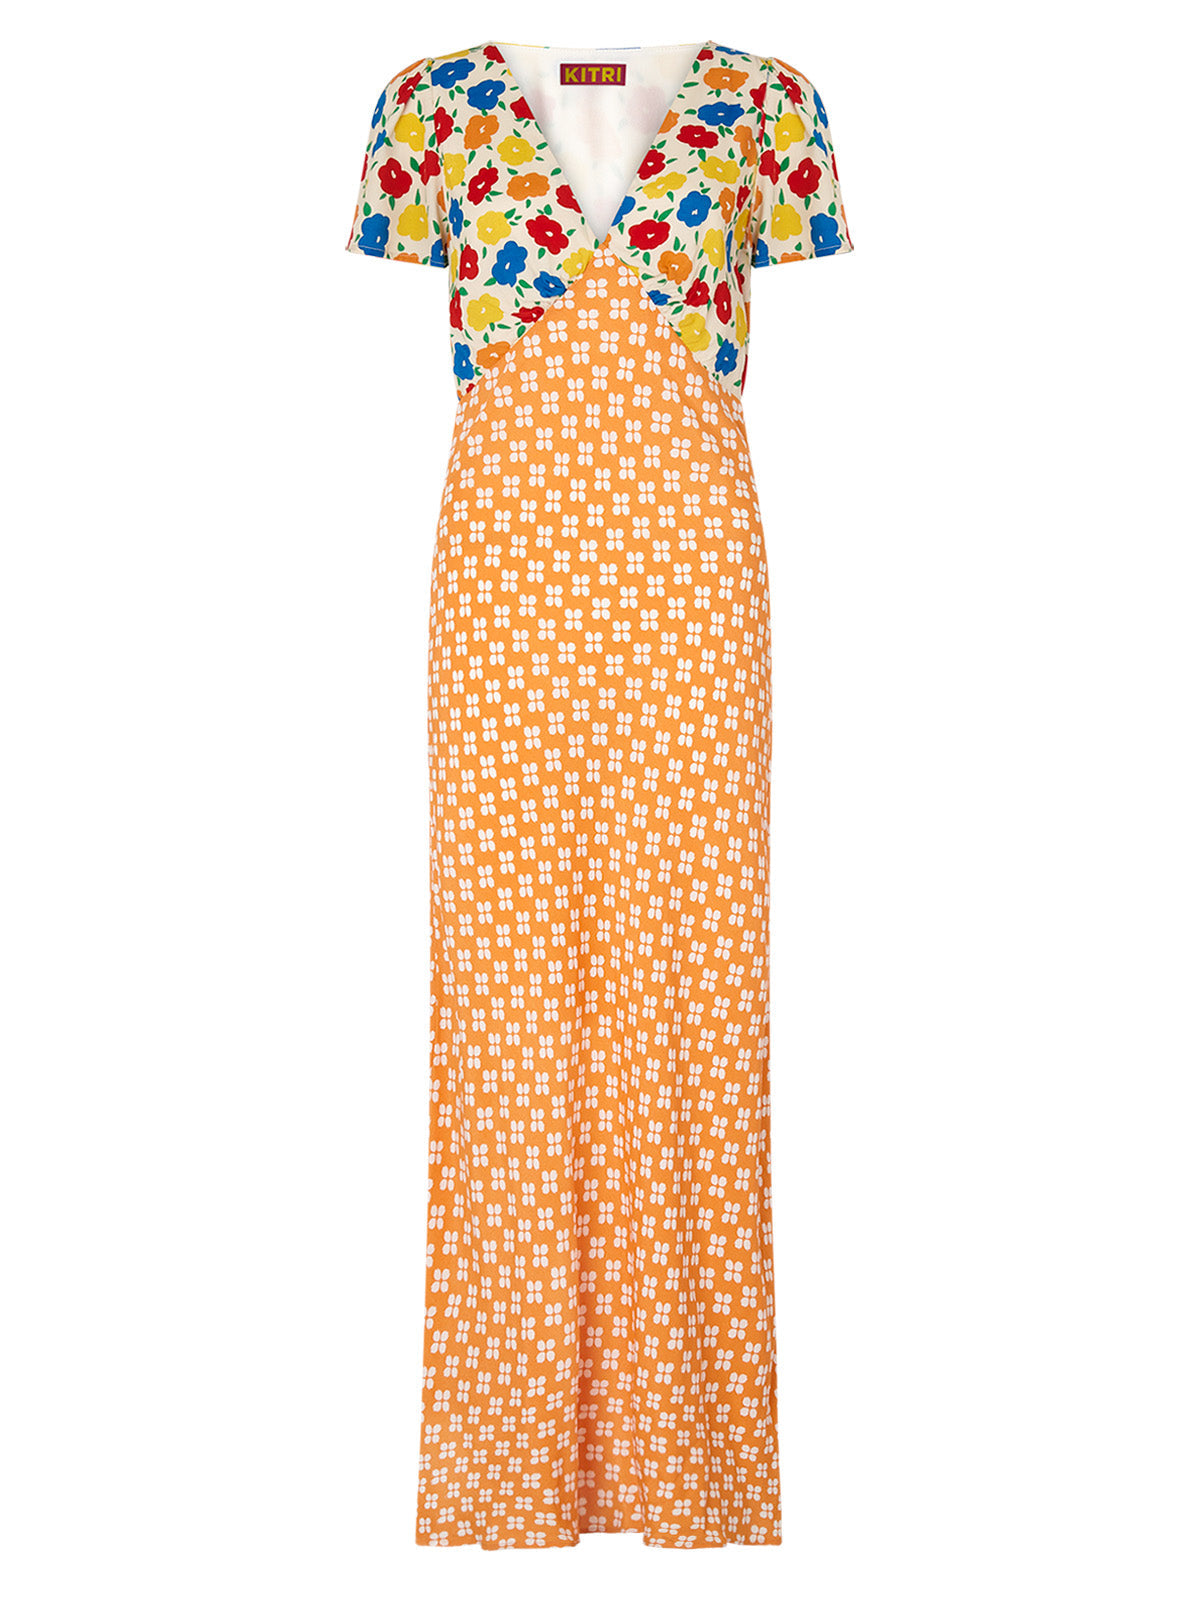 Effie Mixed Print Dress by KITRI Studio